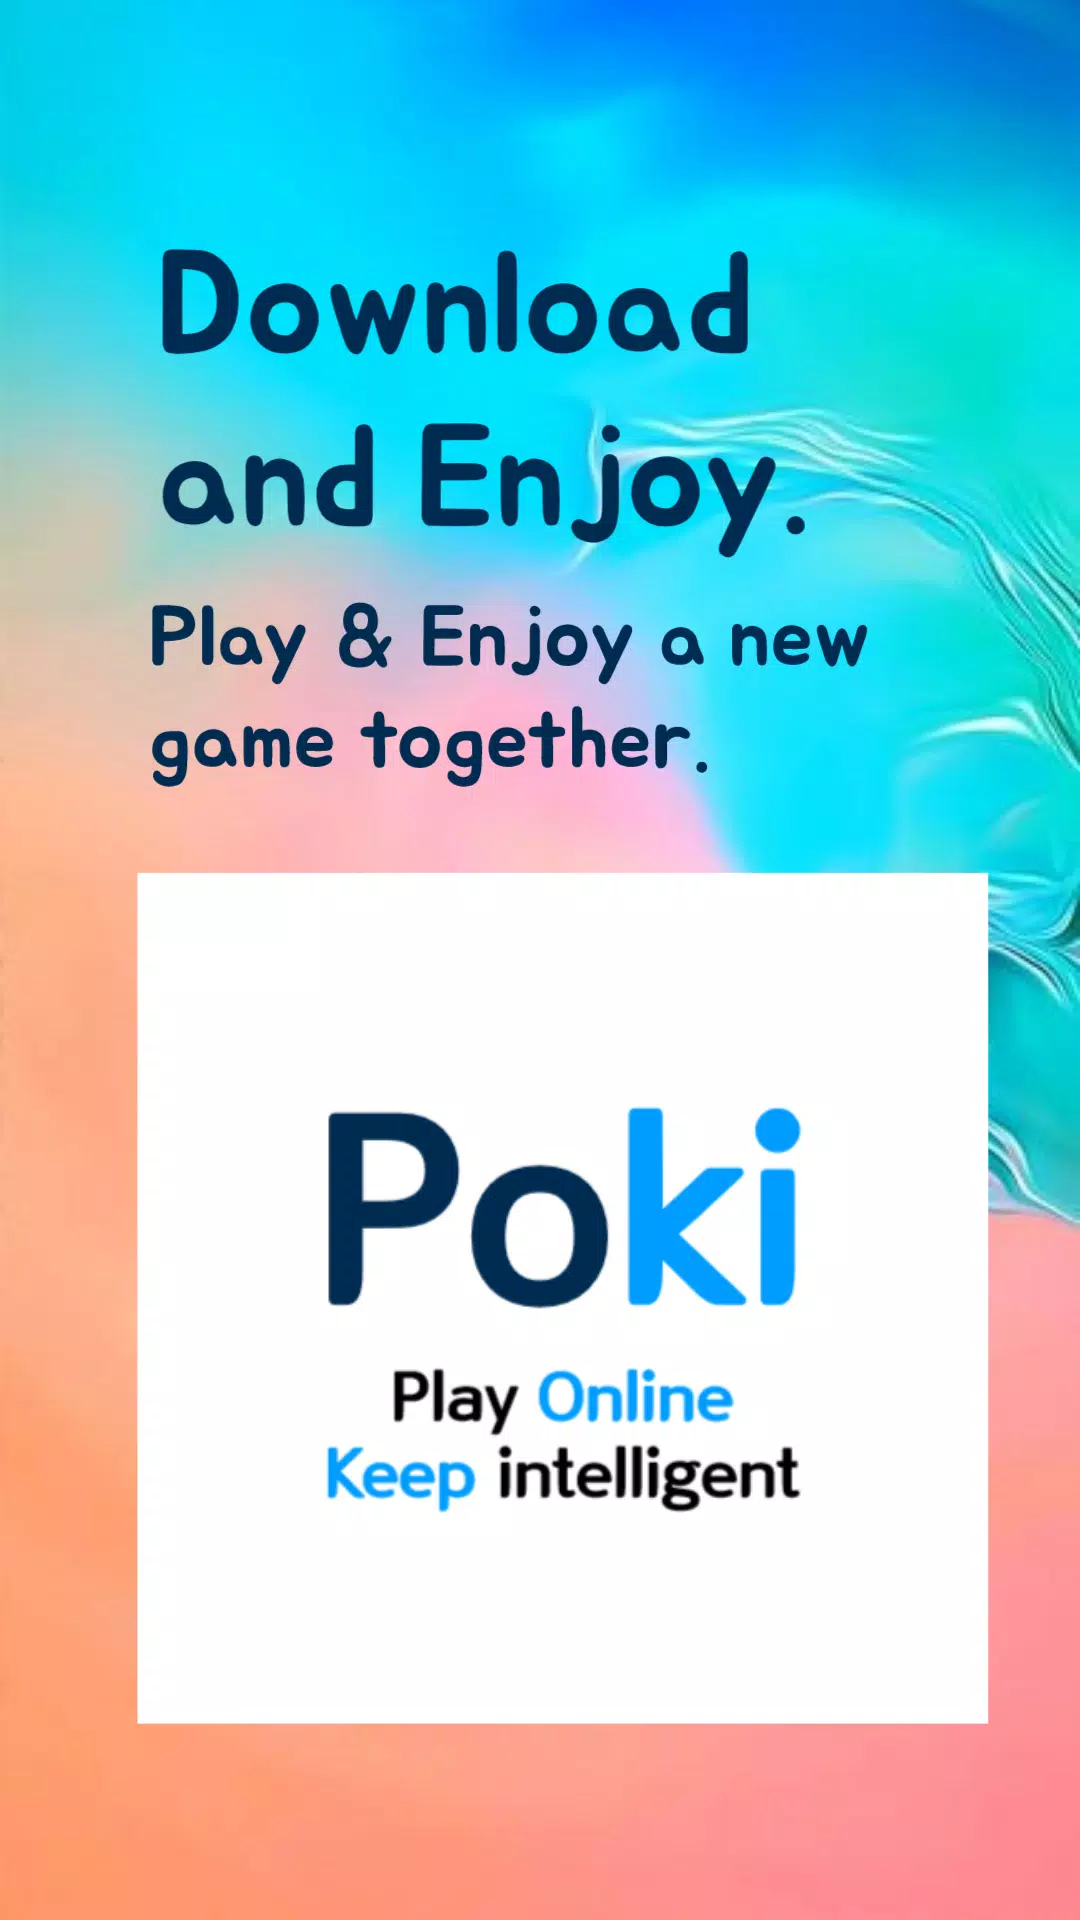 Poki Games Online APK (Android Game) - Free Download